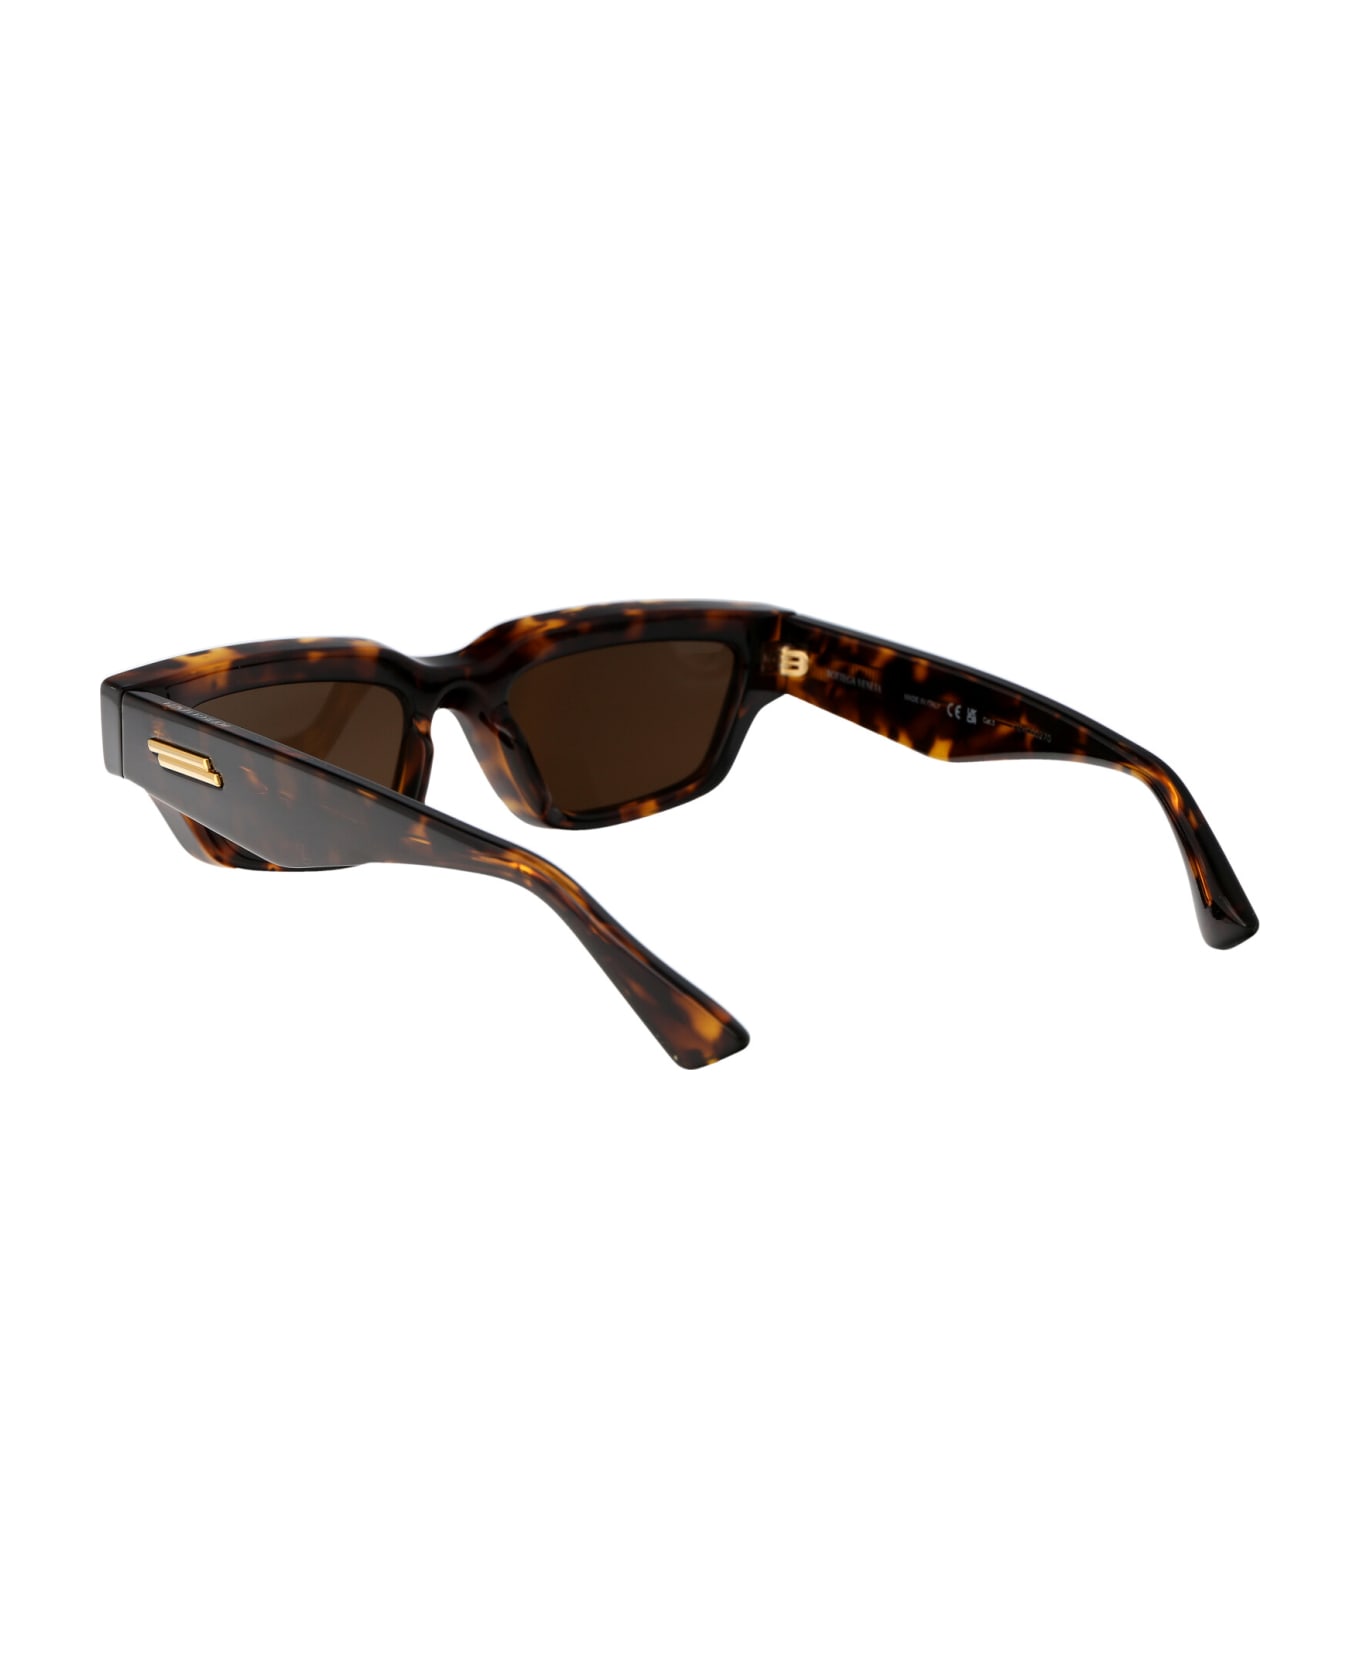 Bottega Veneta Eyewear Bv1250s Sunglasses - 002 HAVANA HAVANA BROWN